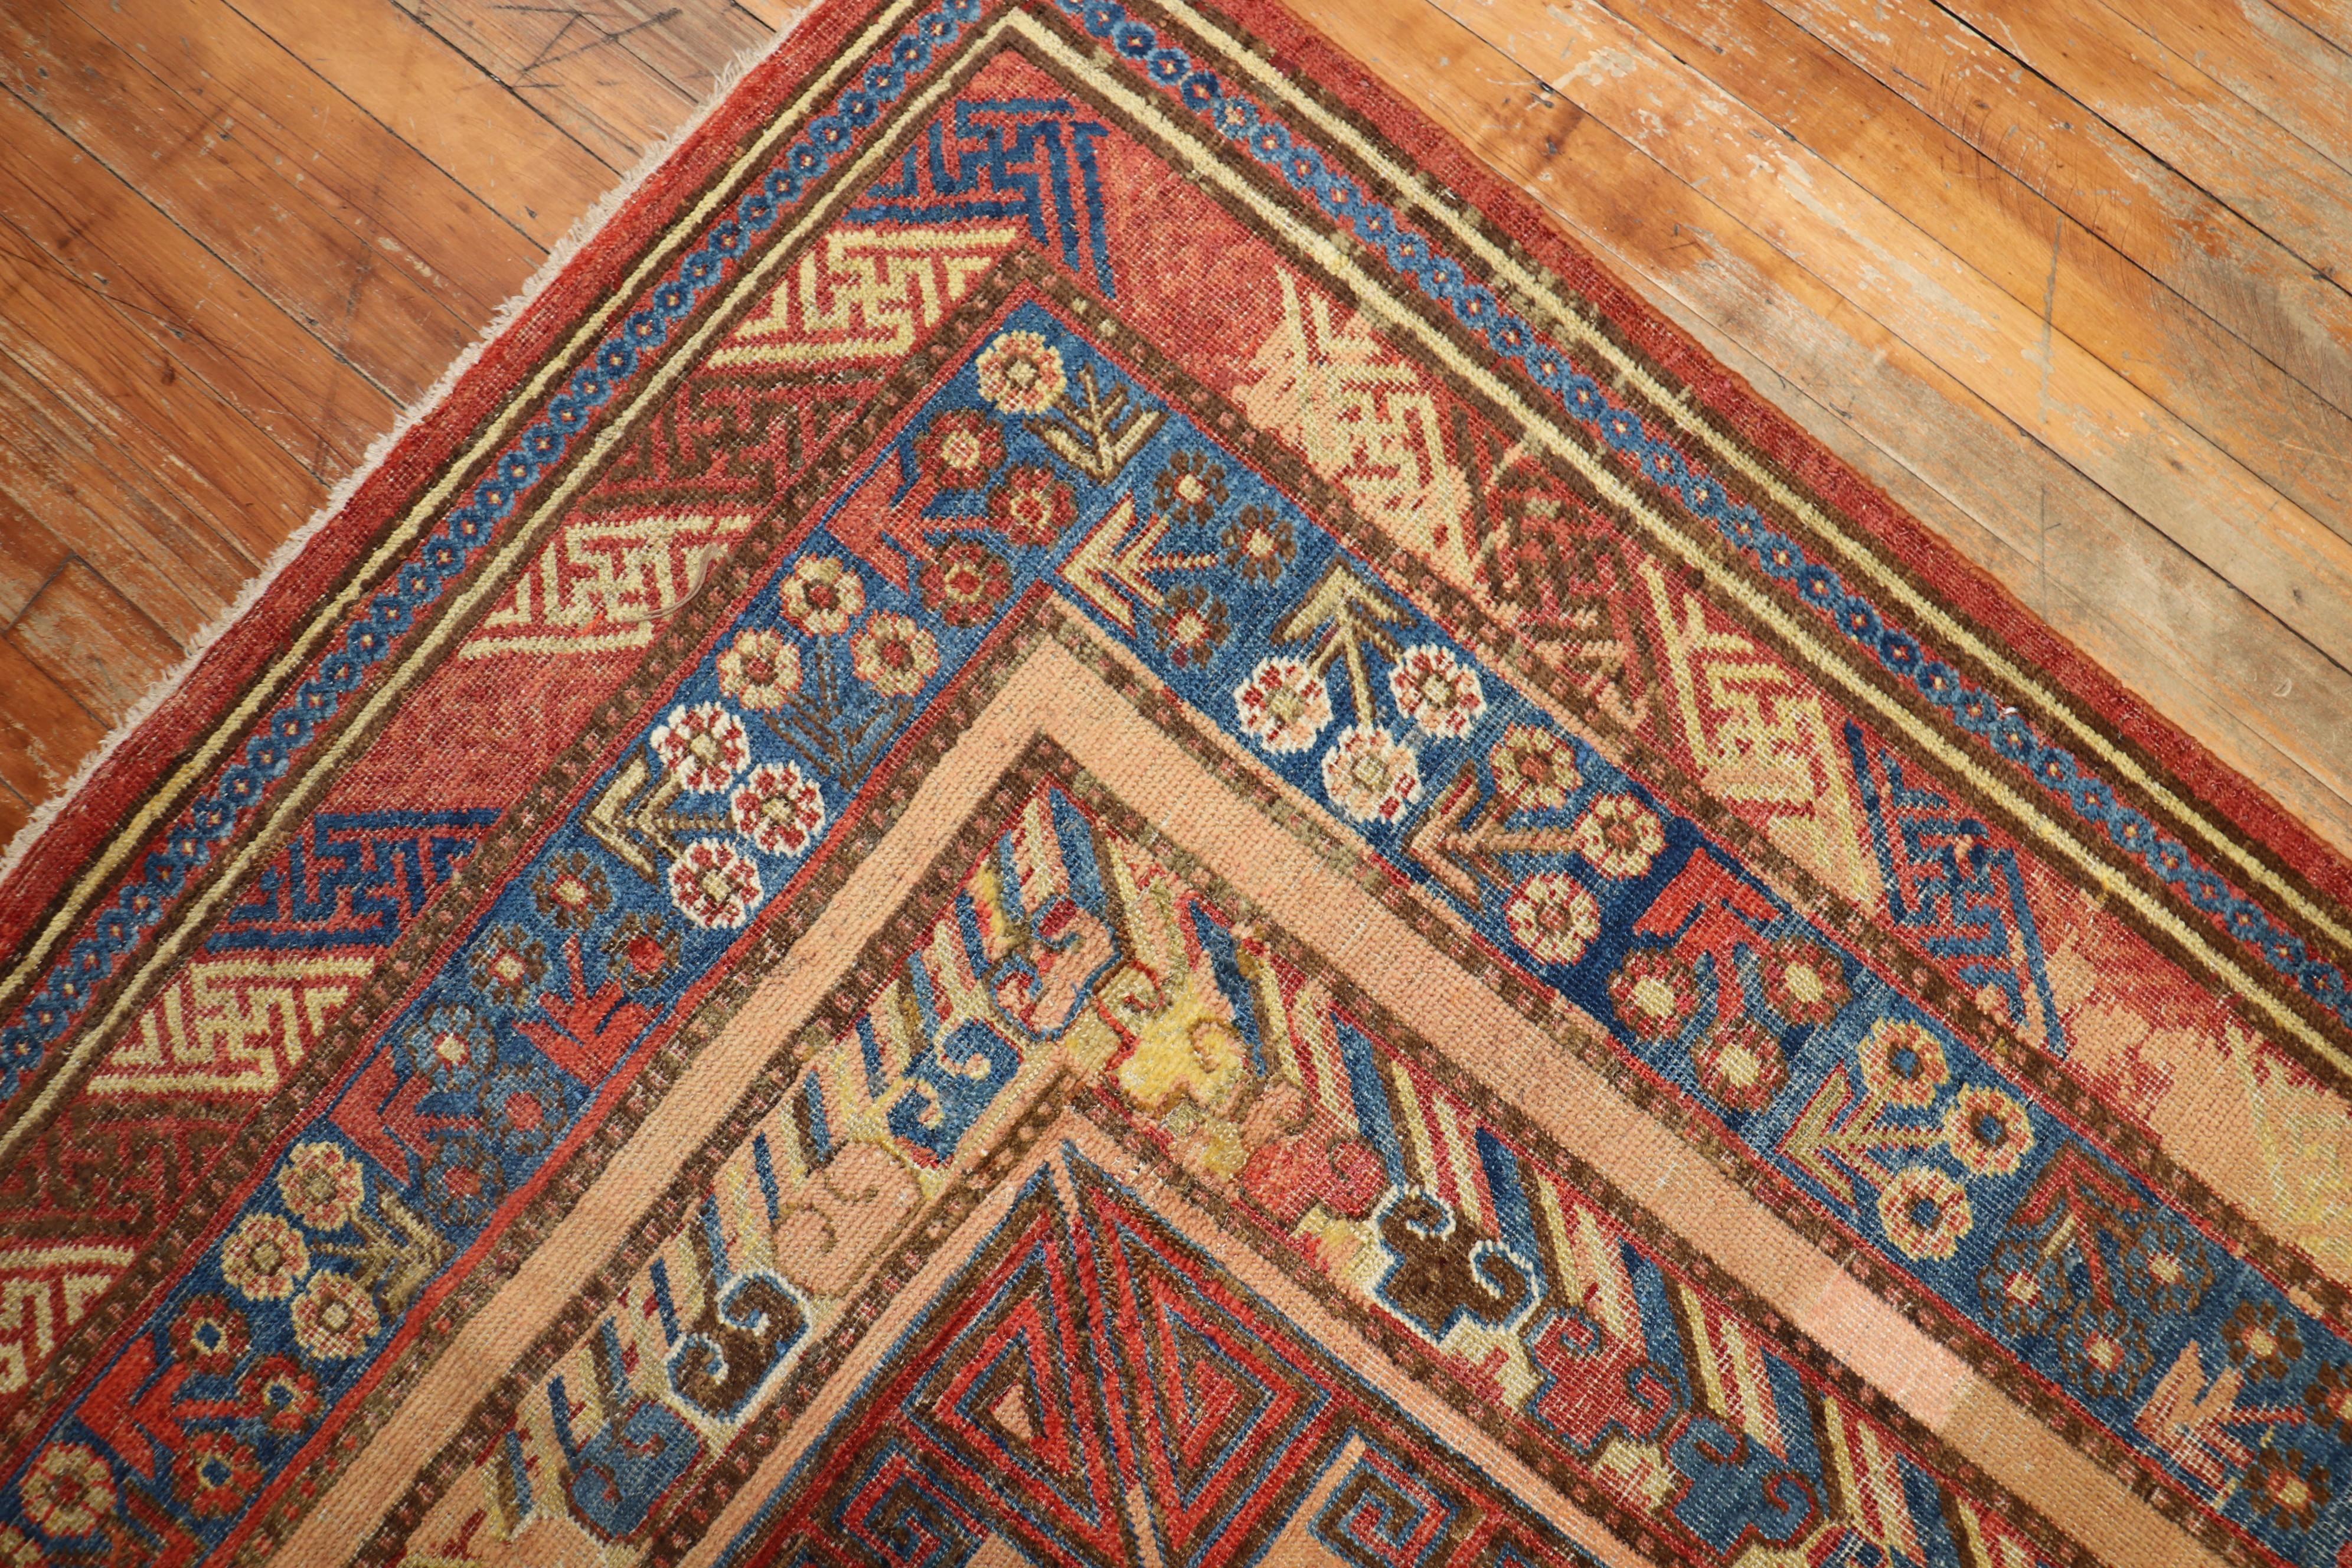 20th Century Exquisite 19th Century Antique East Turkestan Khotan Rug For Sale